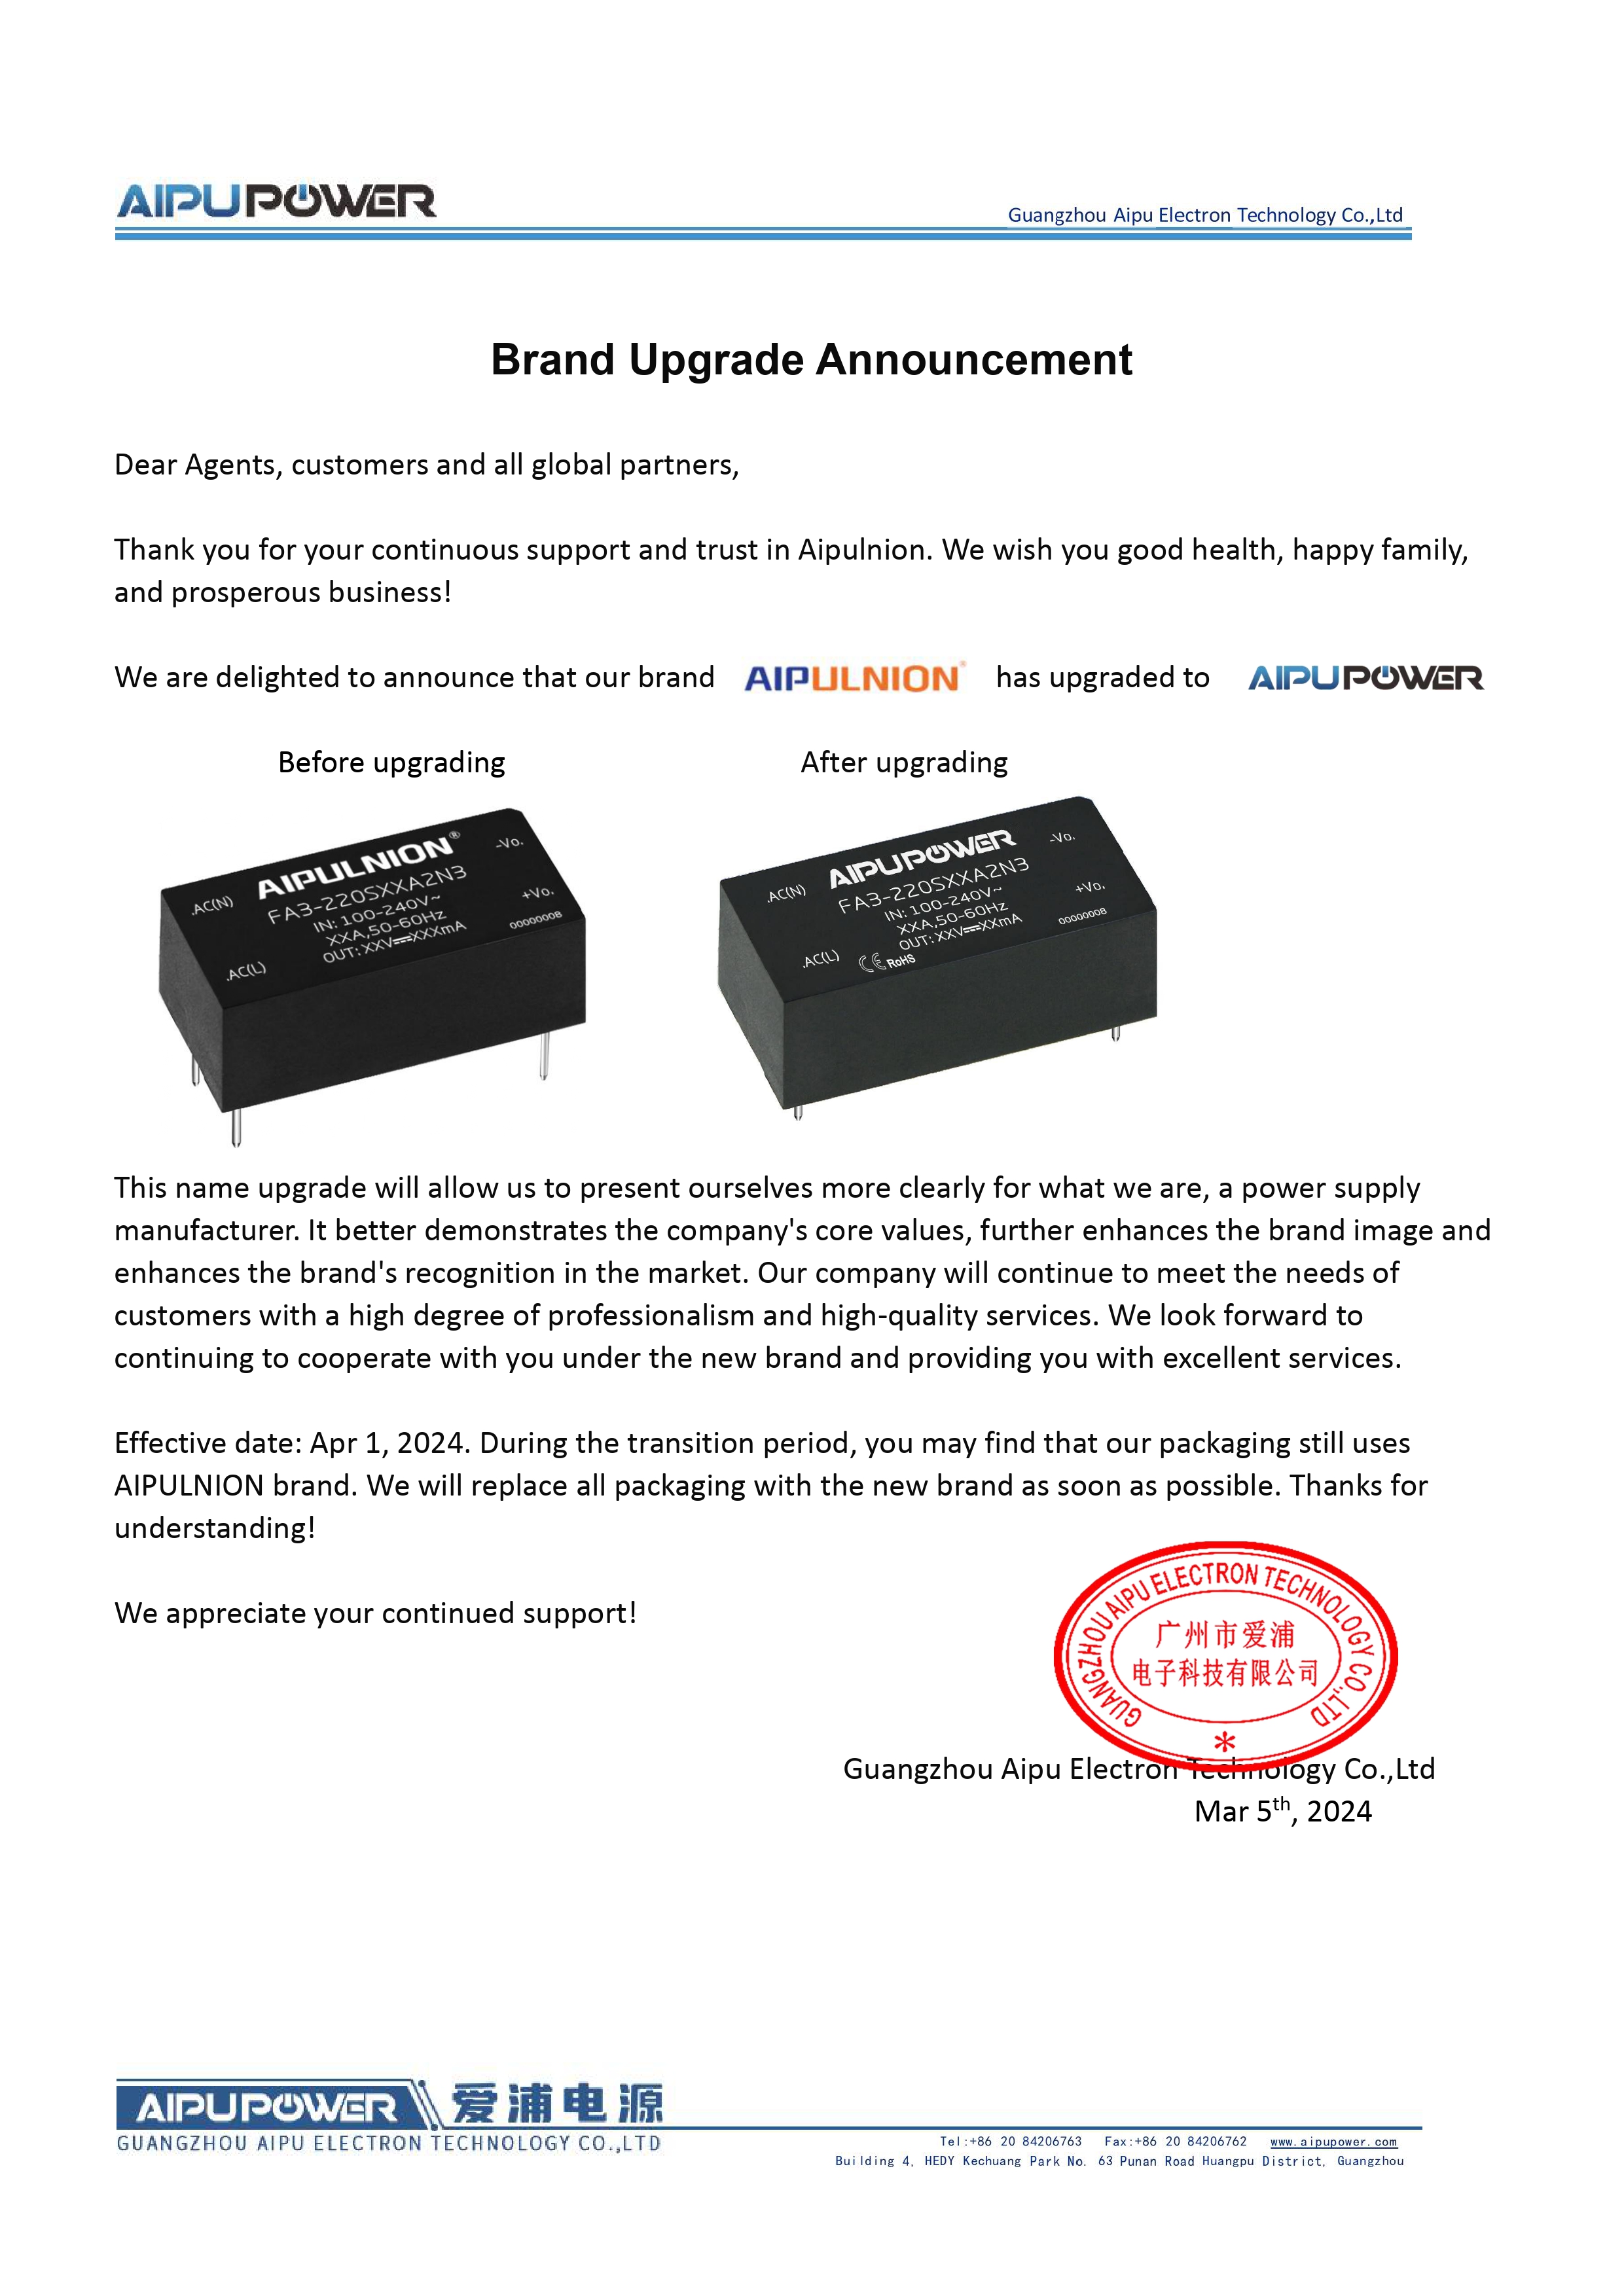 AIPUPOWER-Brand Upgrade Announcement 品牌升级通知函 - 2024-1-10(1)_page-0001.jpg